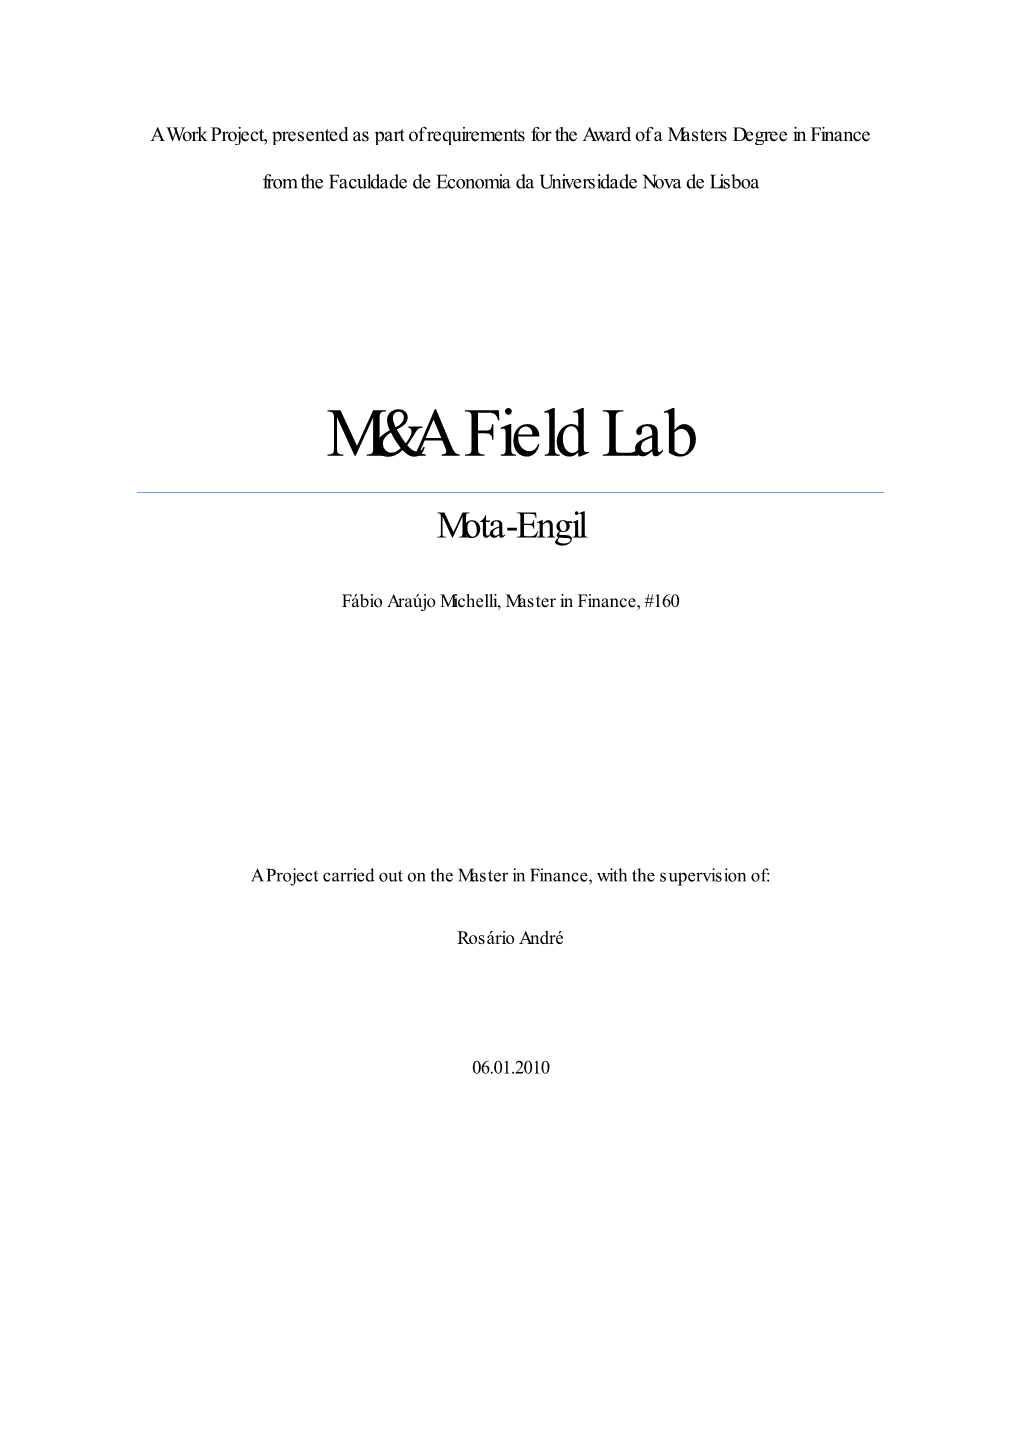 Mota-Engil M&A Report 03.01.10